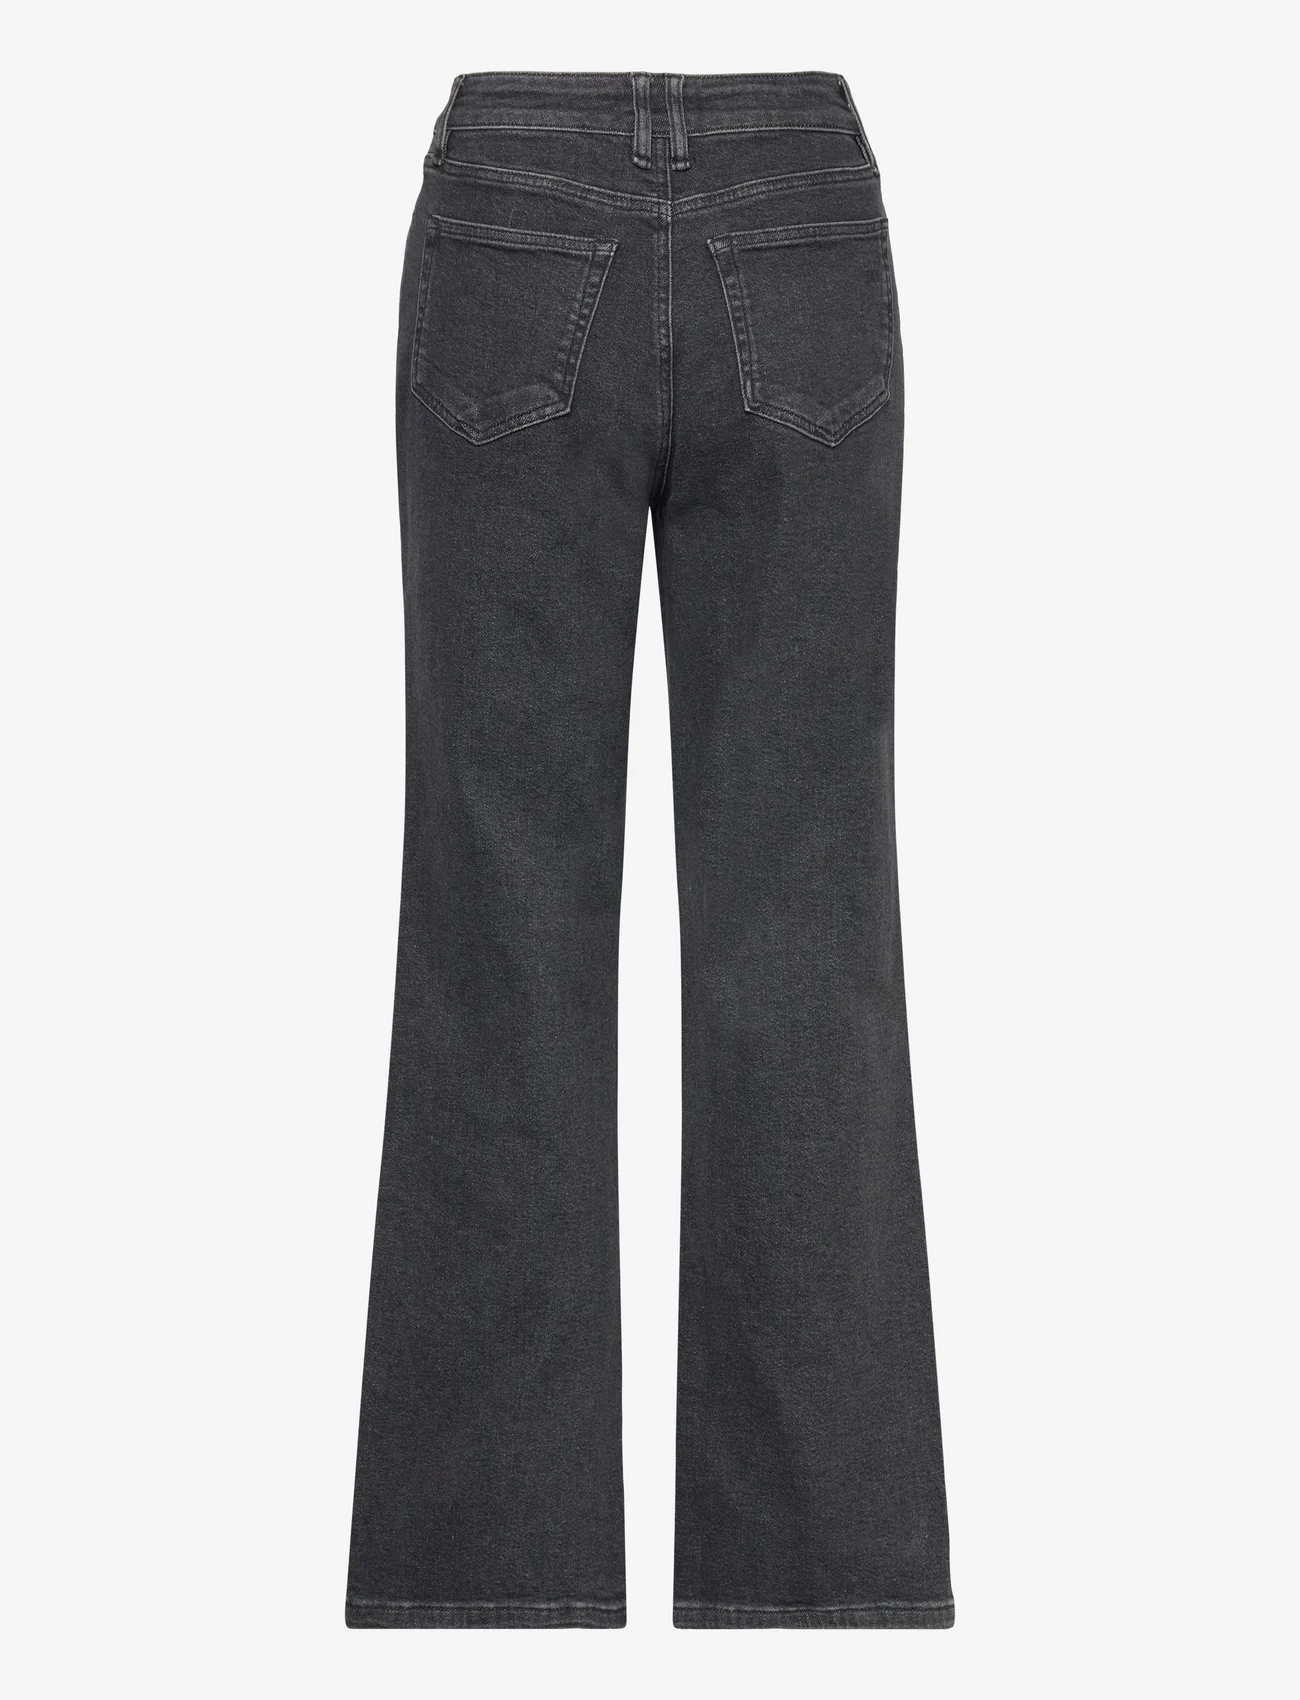 IVY Copenhagen - IVY-Mia Jeans Wash Vintage Black - straight jeans - black - 1